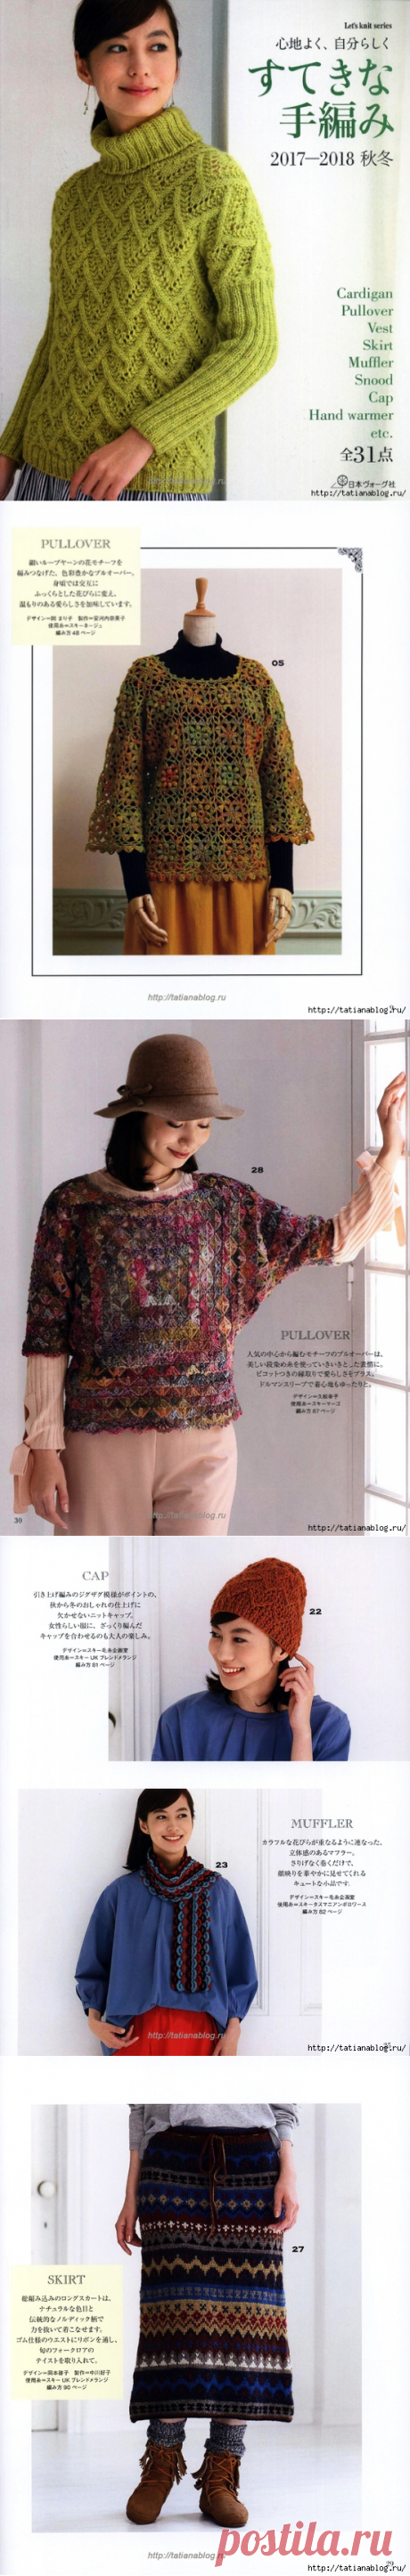 Японский журнал по вязанию Let's knit series NV80554 2017 sp-kr